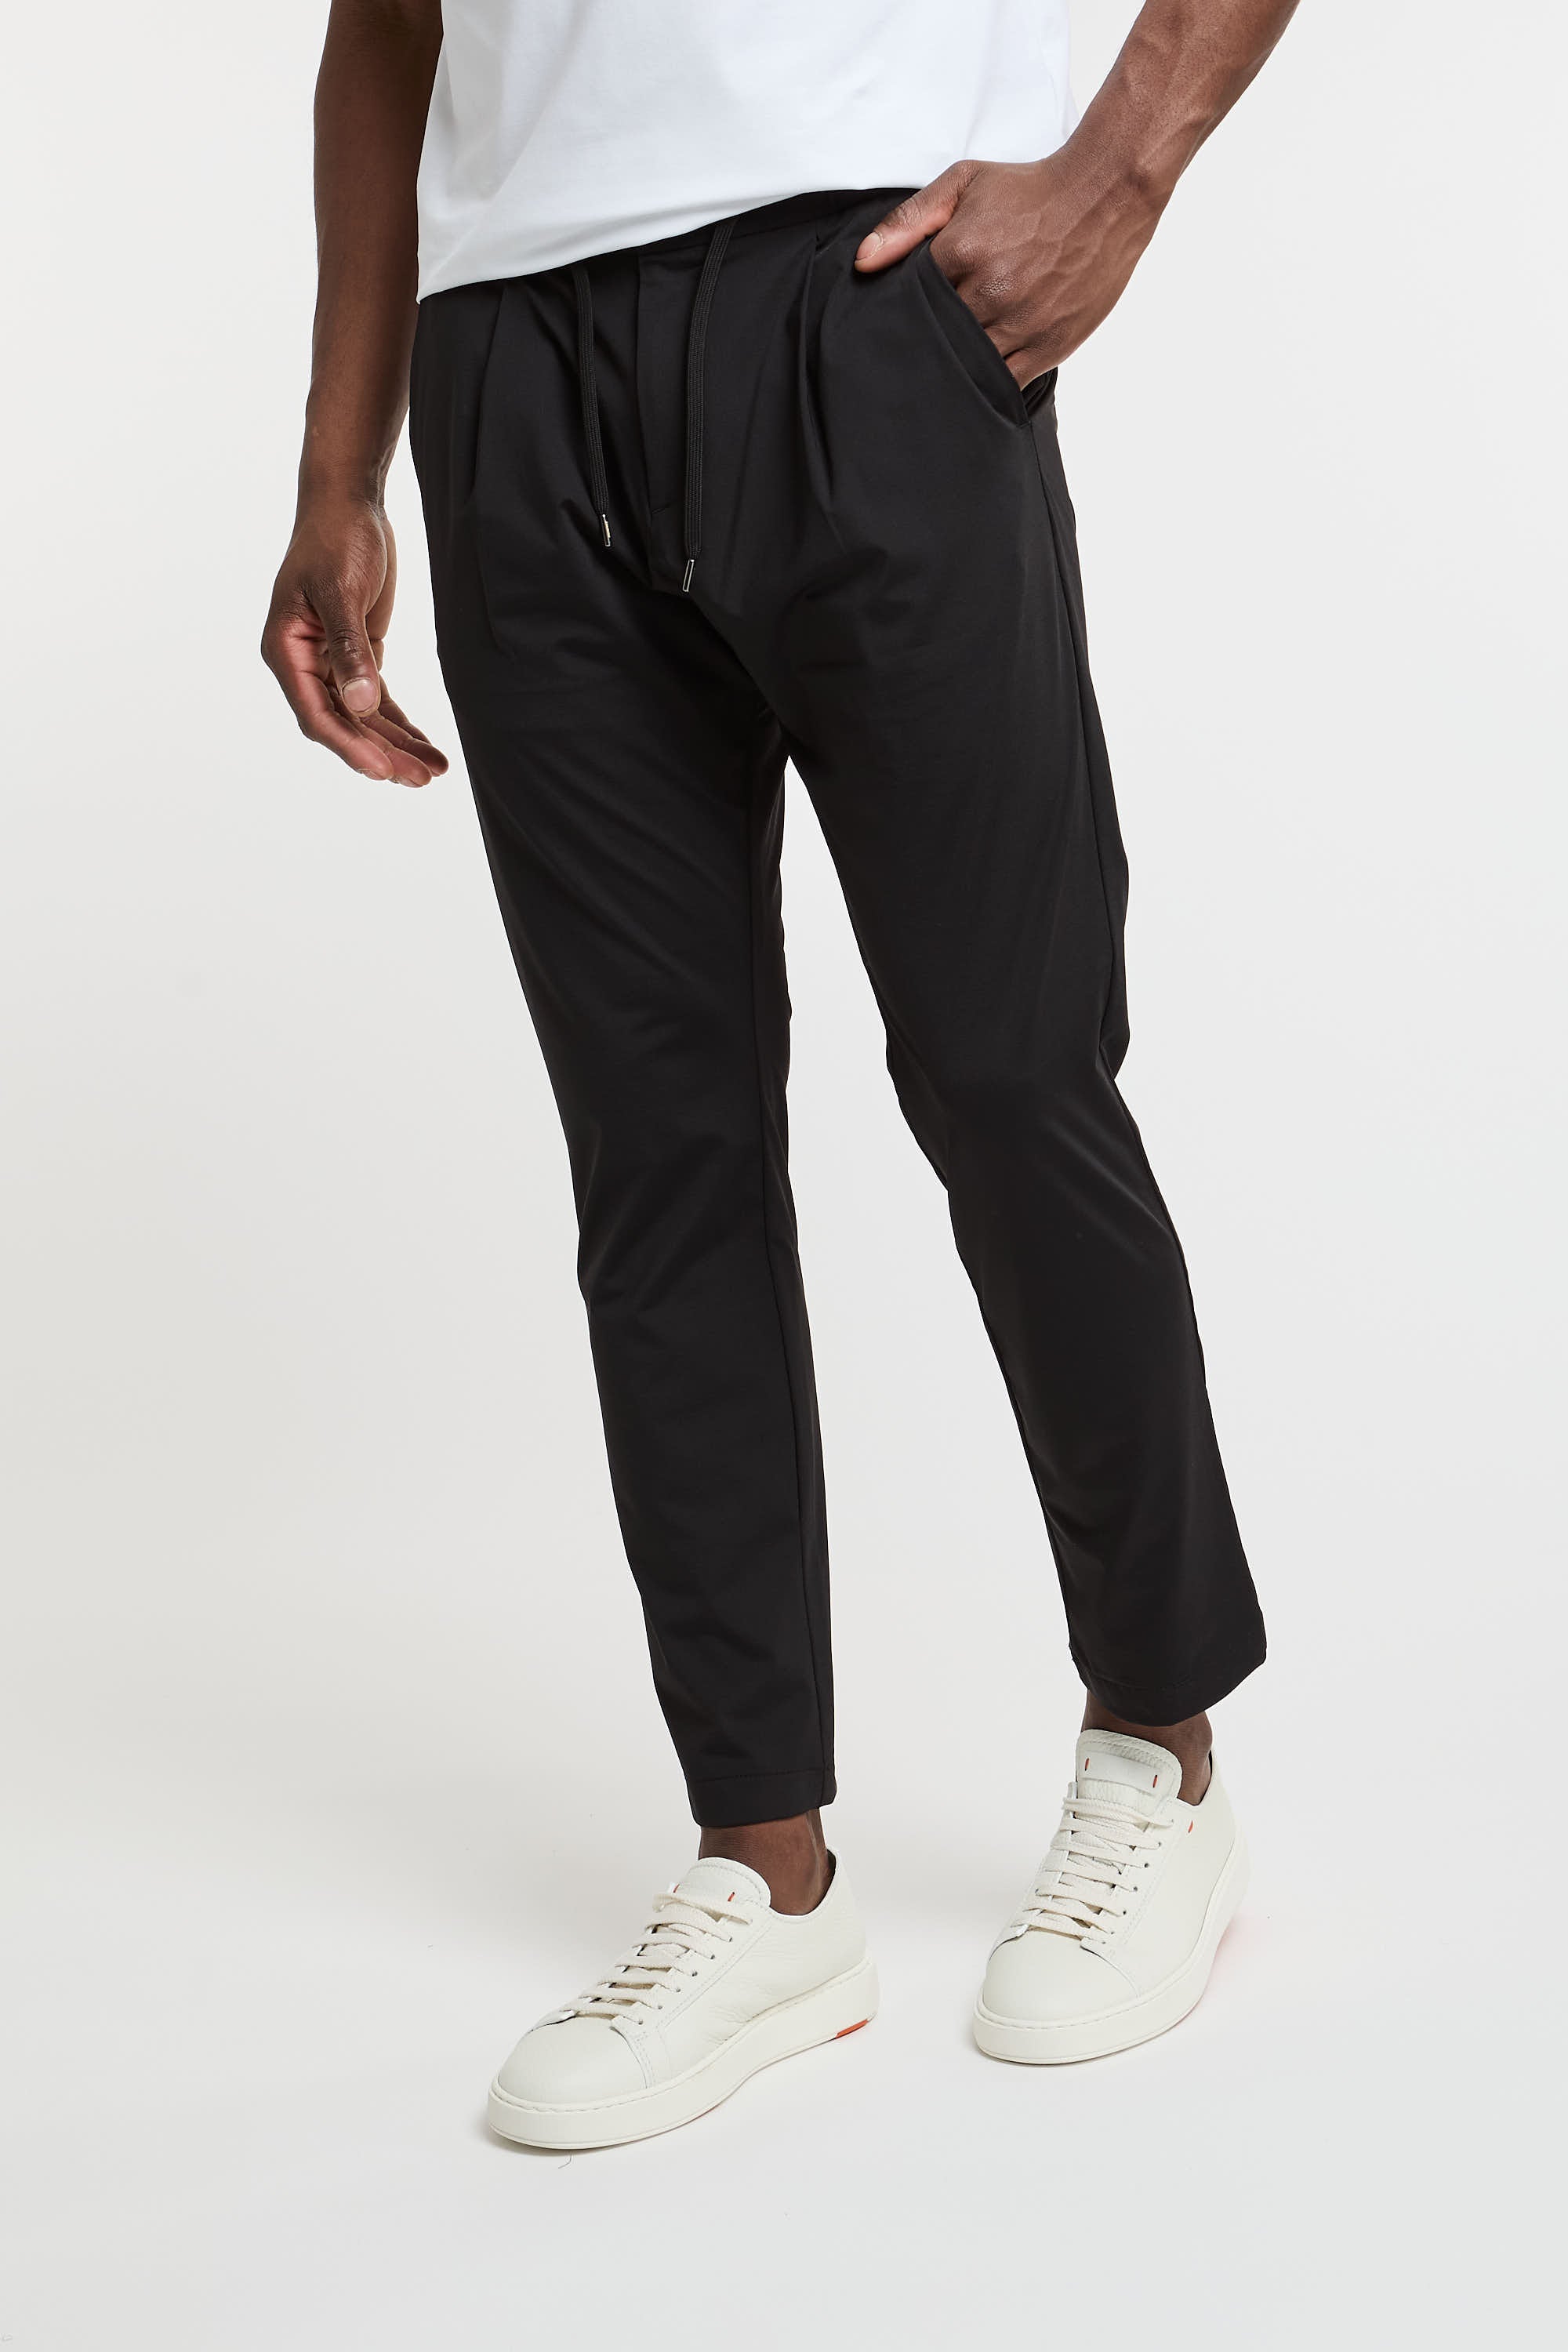 Herno Black Nylon Jersey Pants-4